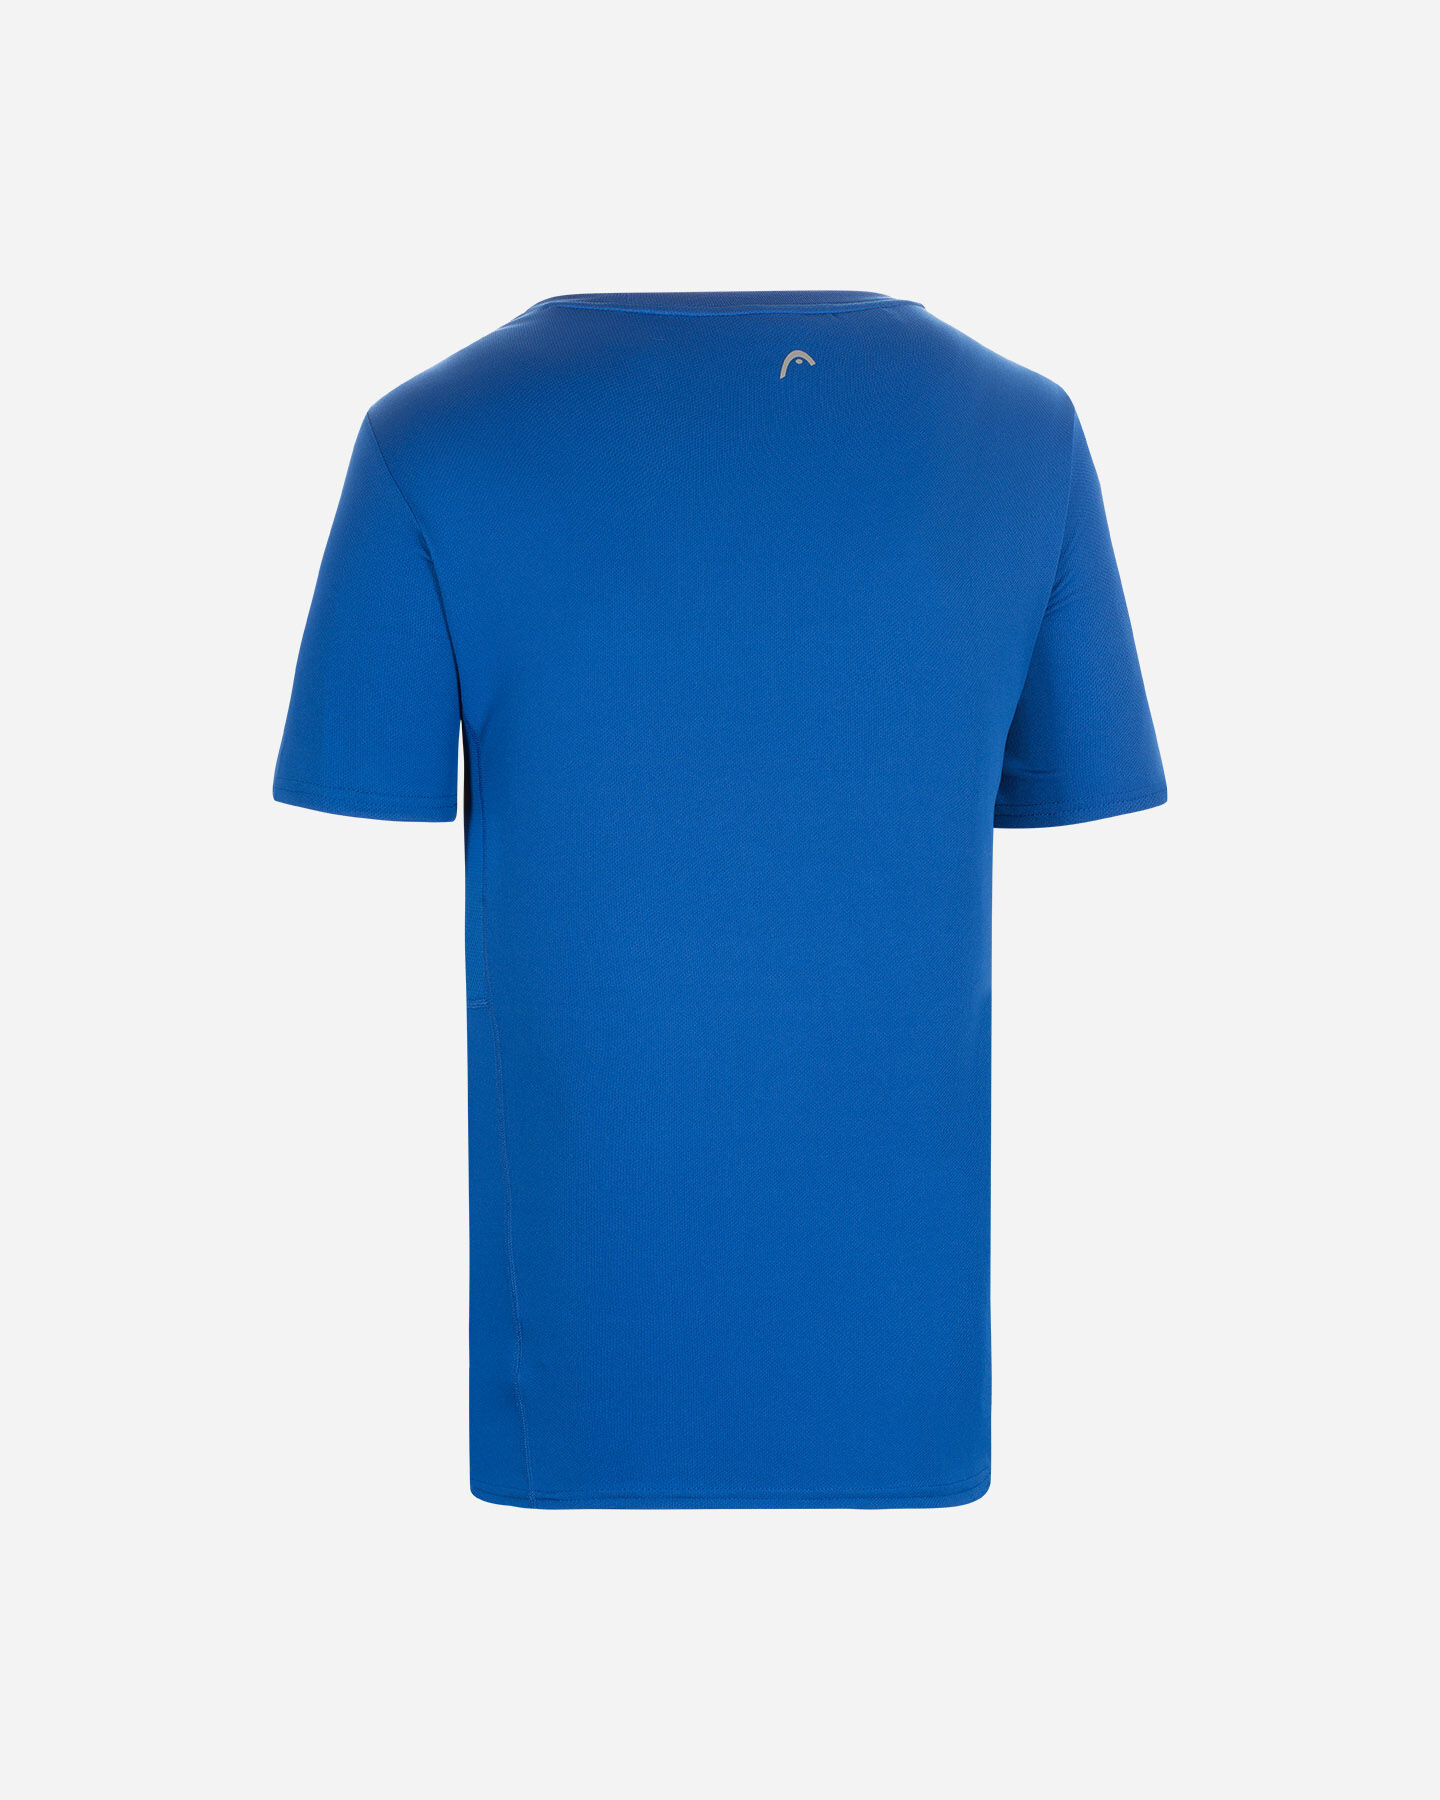  T-Shirt tennis HEAD CLUB TECH M S5098877|RO|S scatto 1